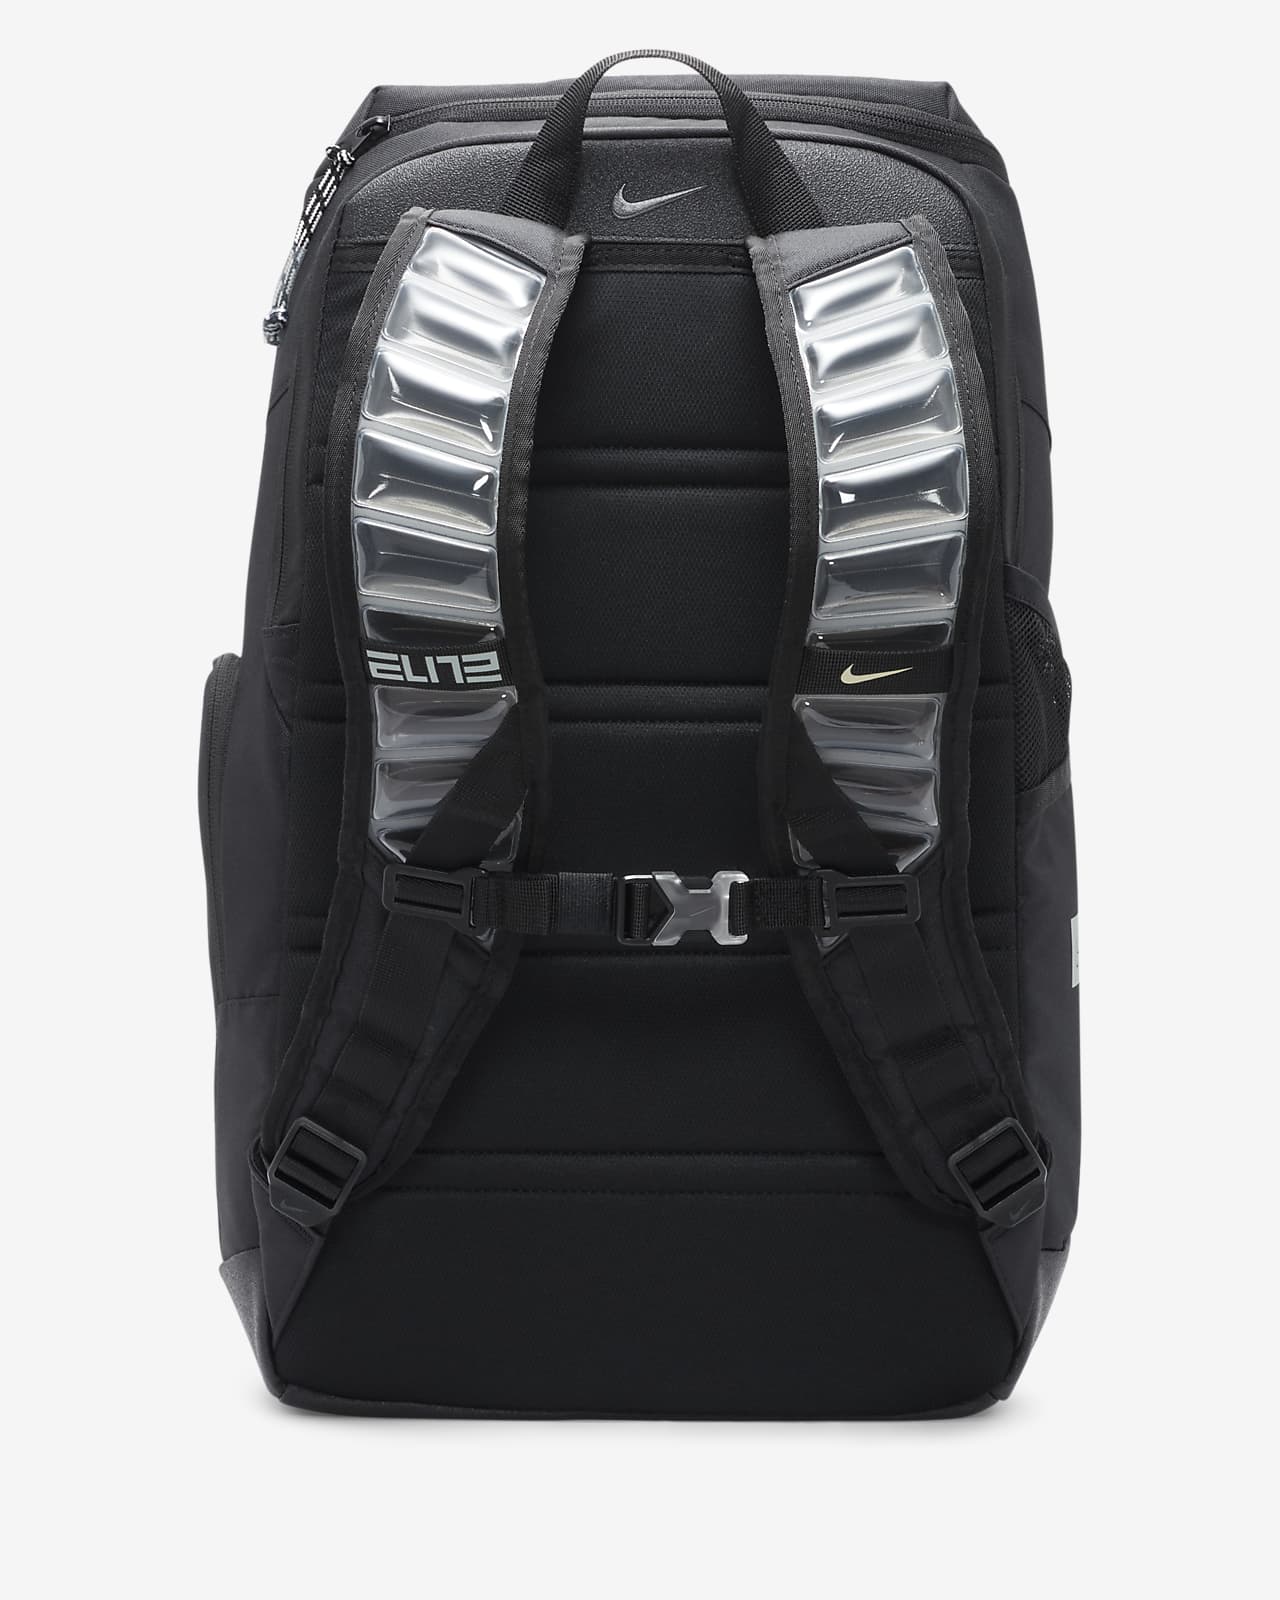 Nike Team USA Elite Pro Basketball Backpack.